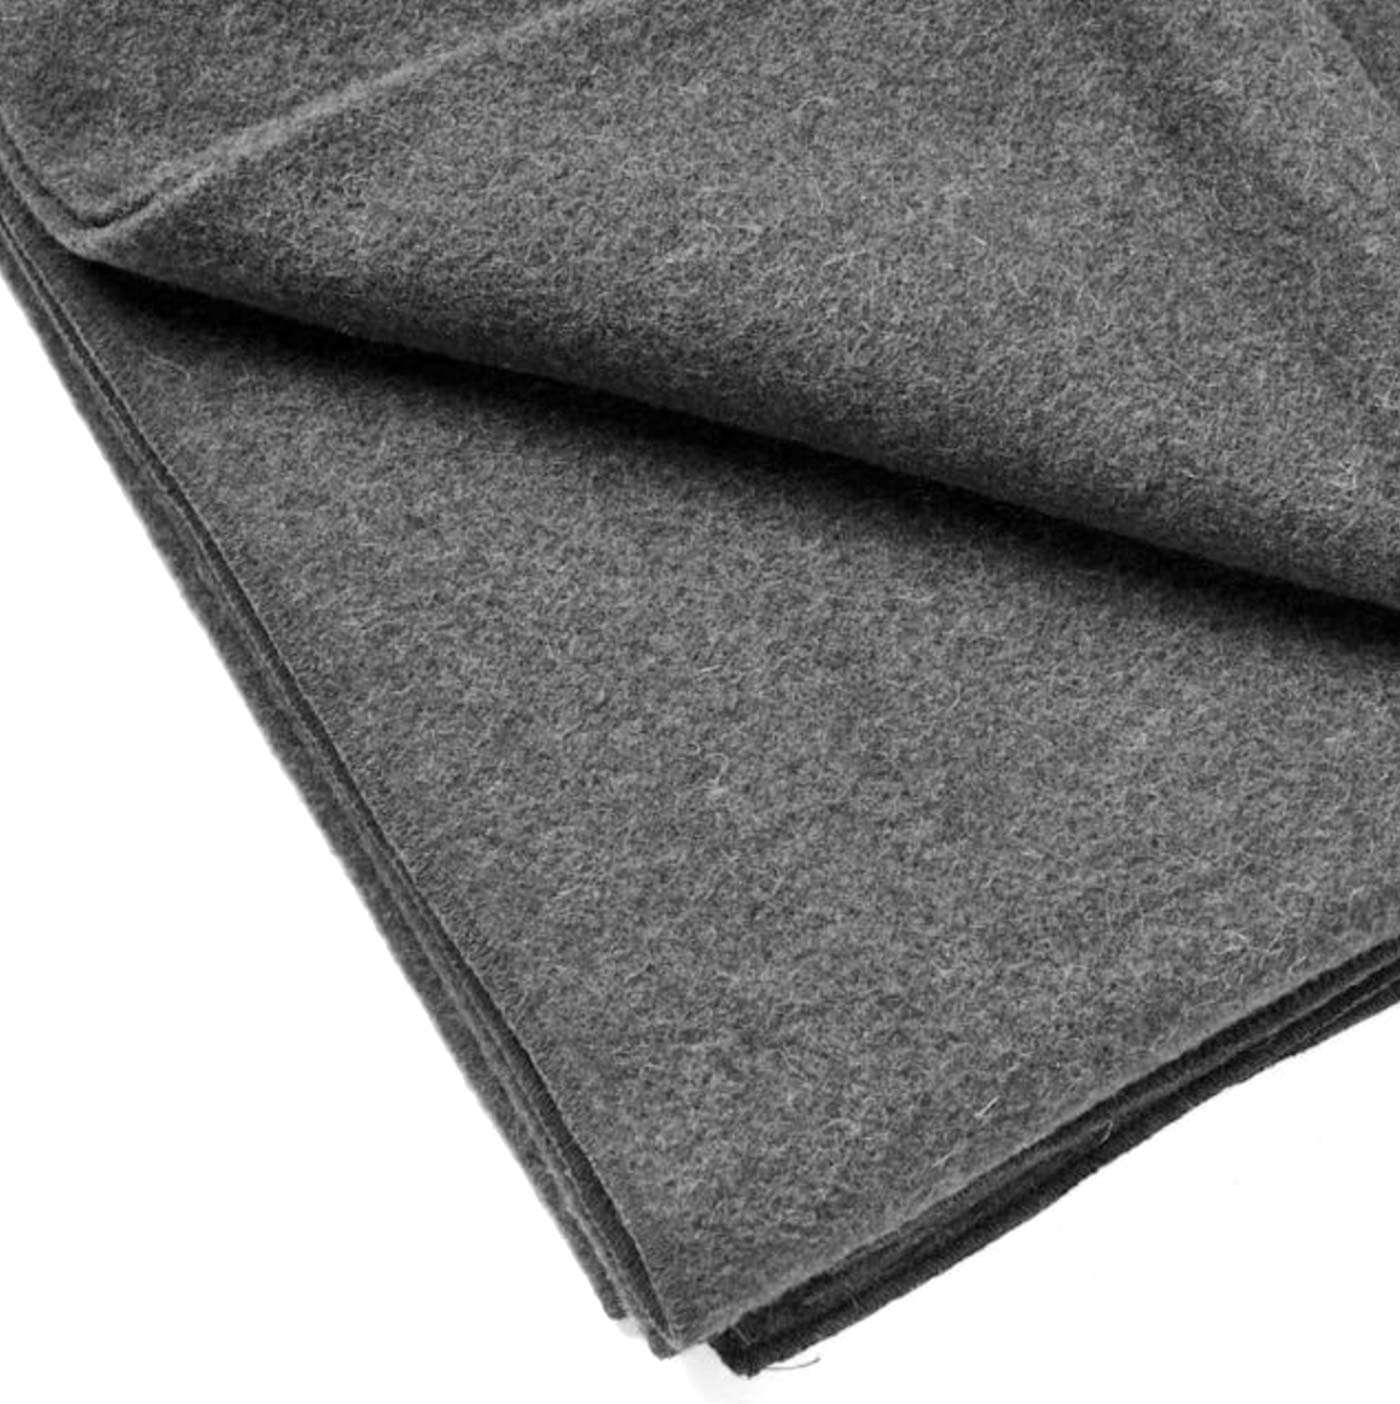 Creswick Wool Personal Protection Bushfire Blanket - Black